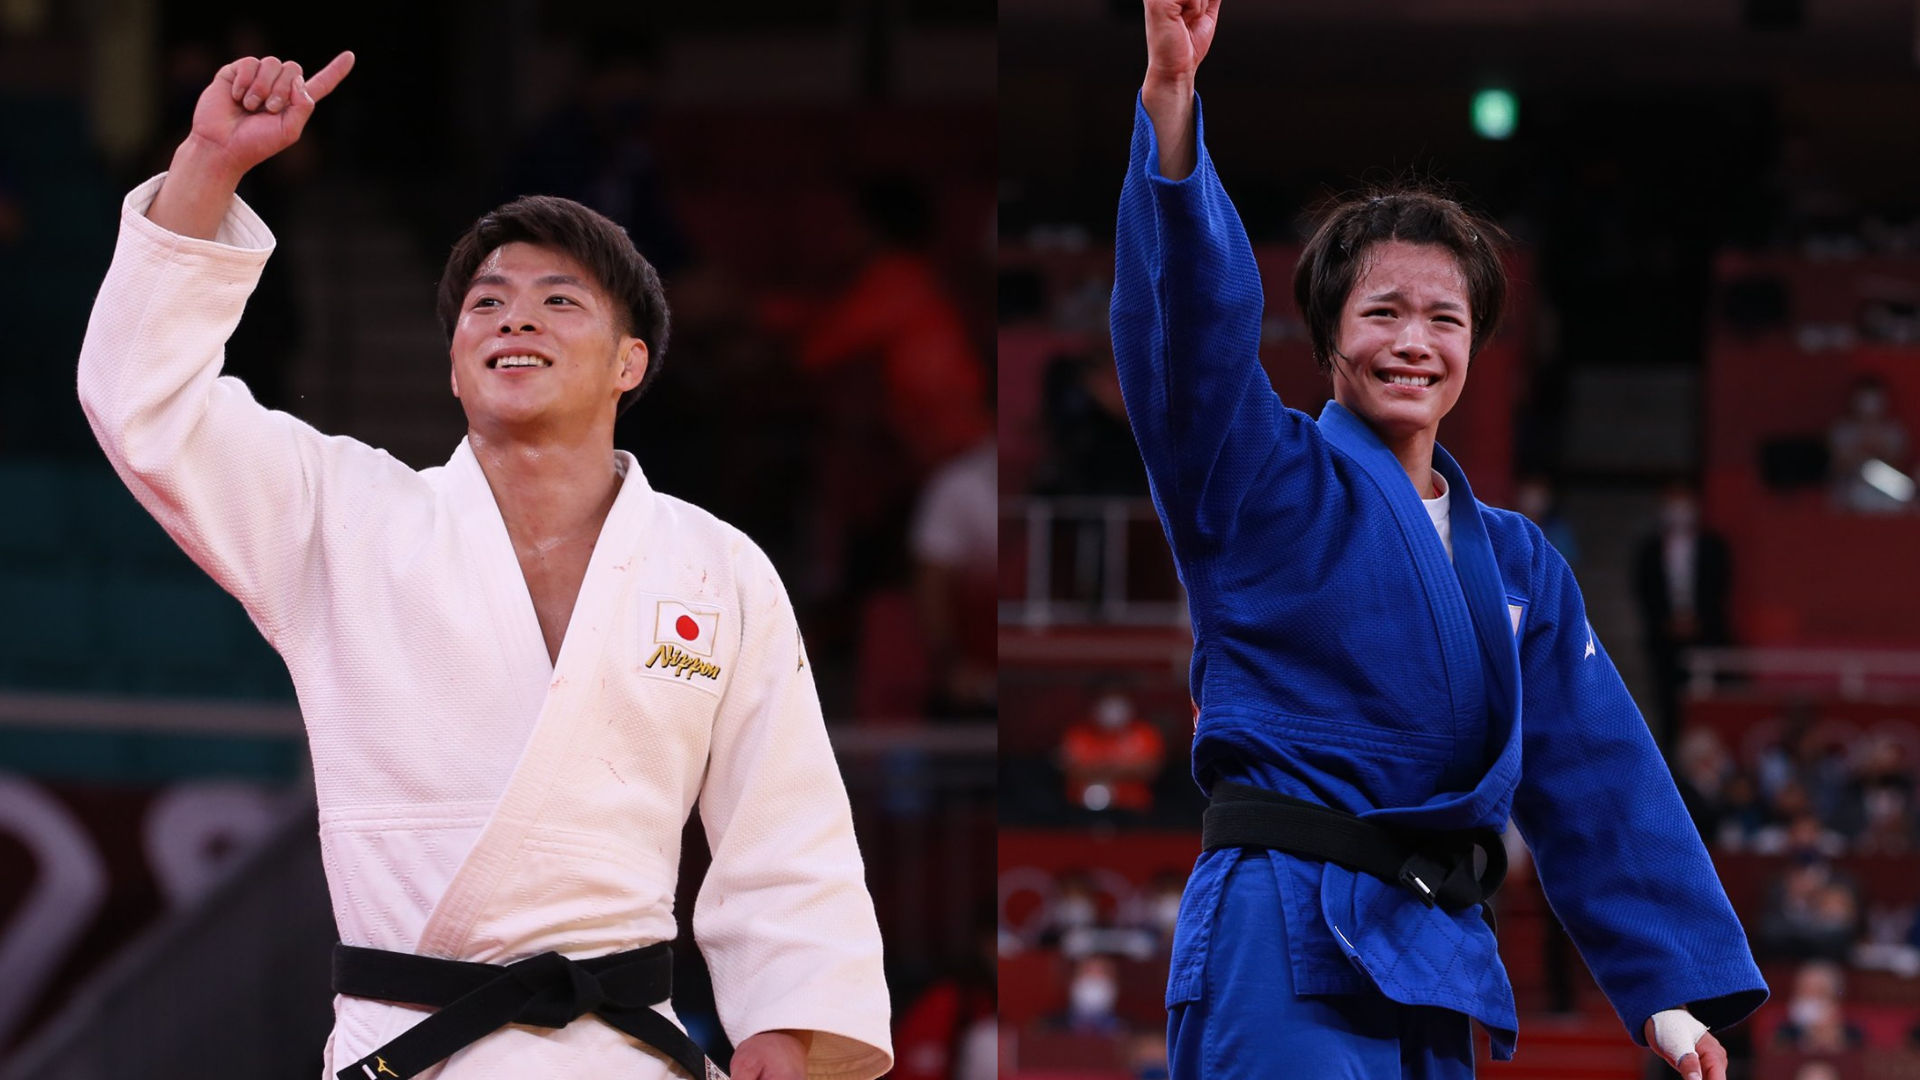 Japan’s judo siblings create history, win gold at Tokyo Olympics on same day